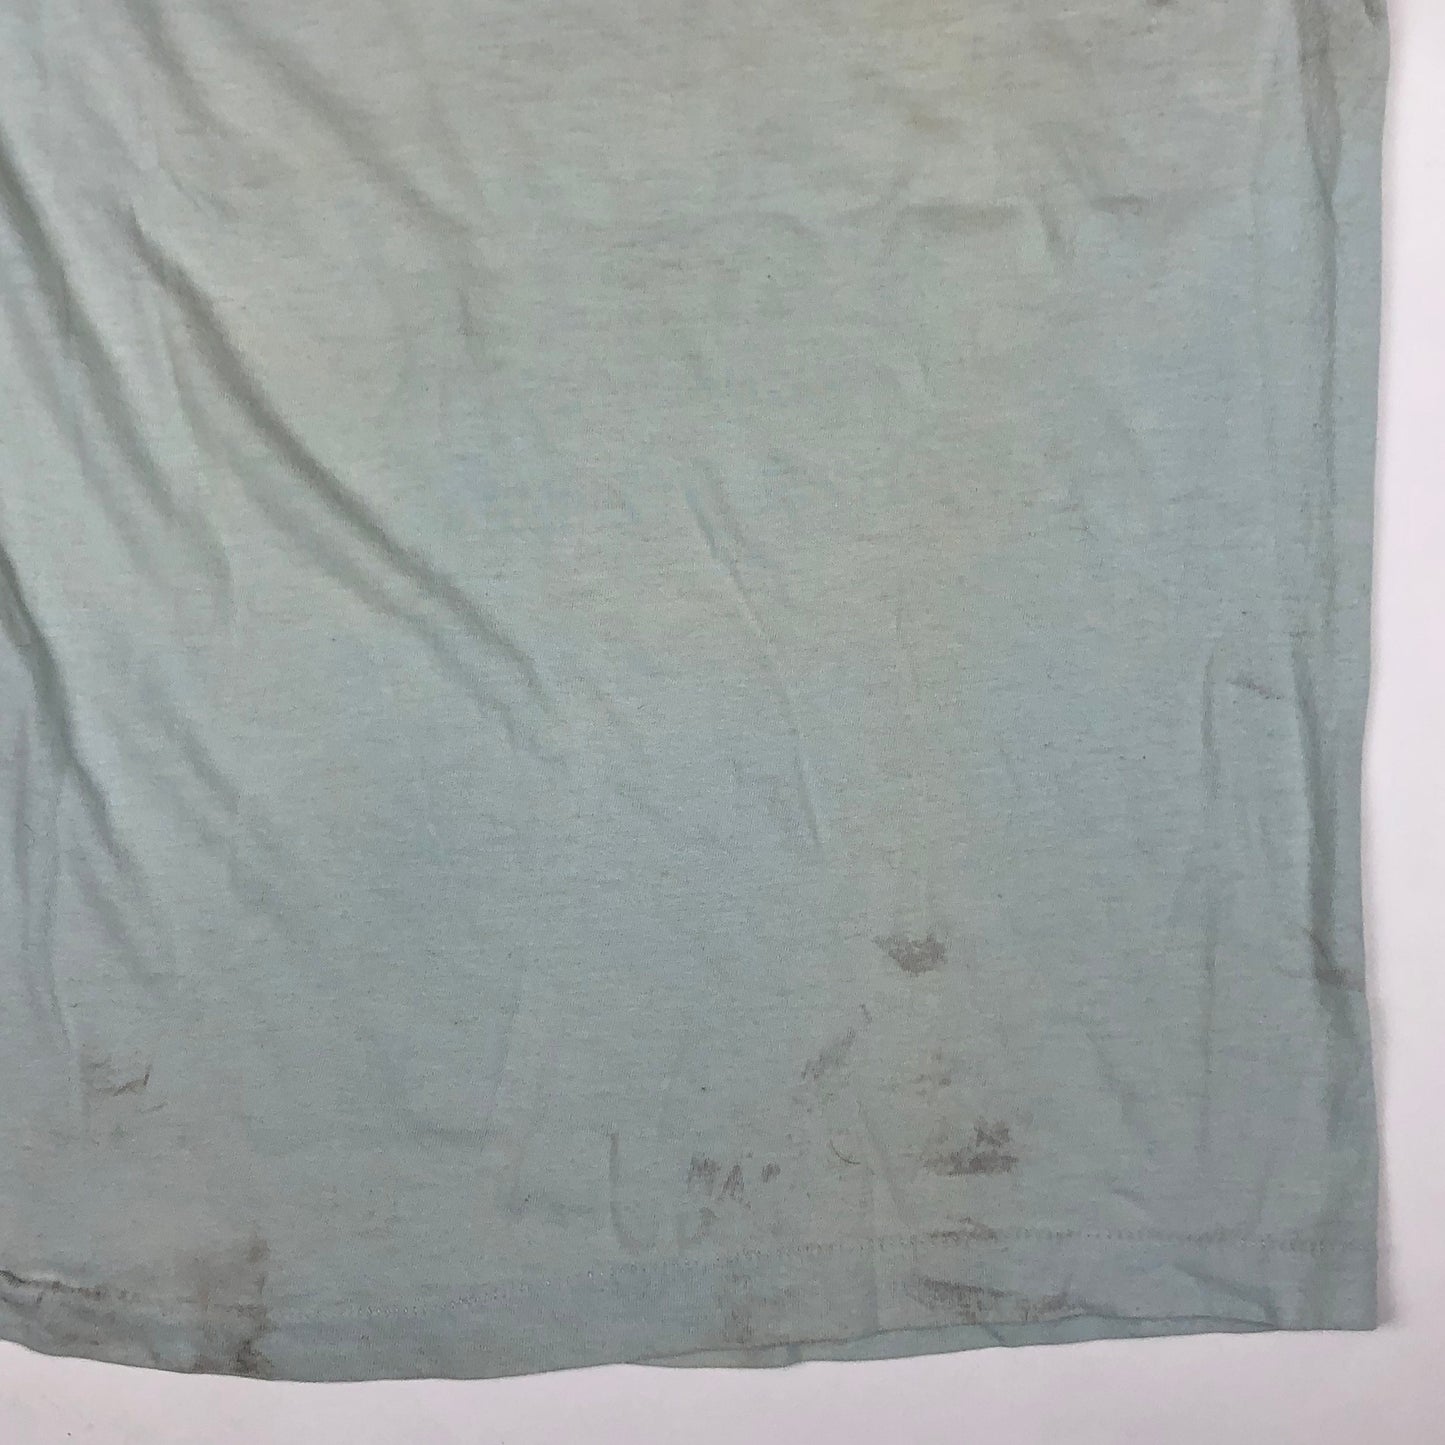 1970s/1980s Dirt Shirts Florida Souvenir T-Shirt Size S